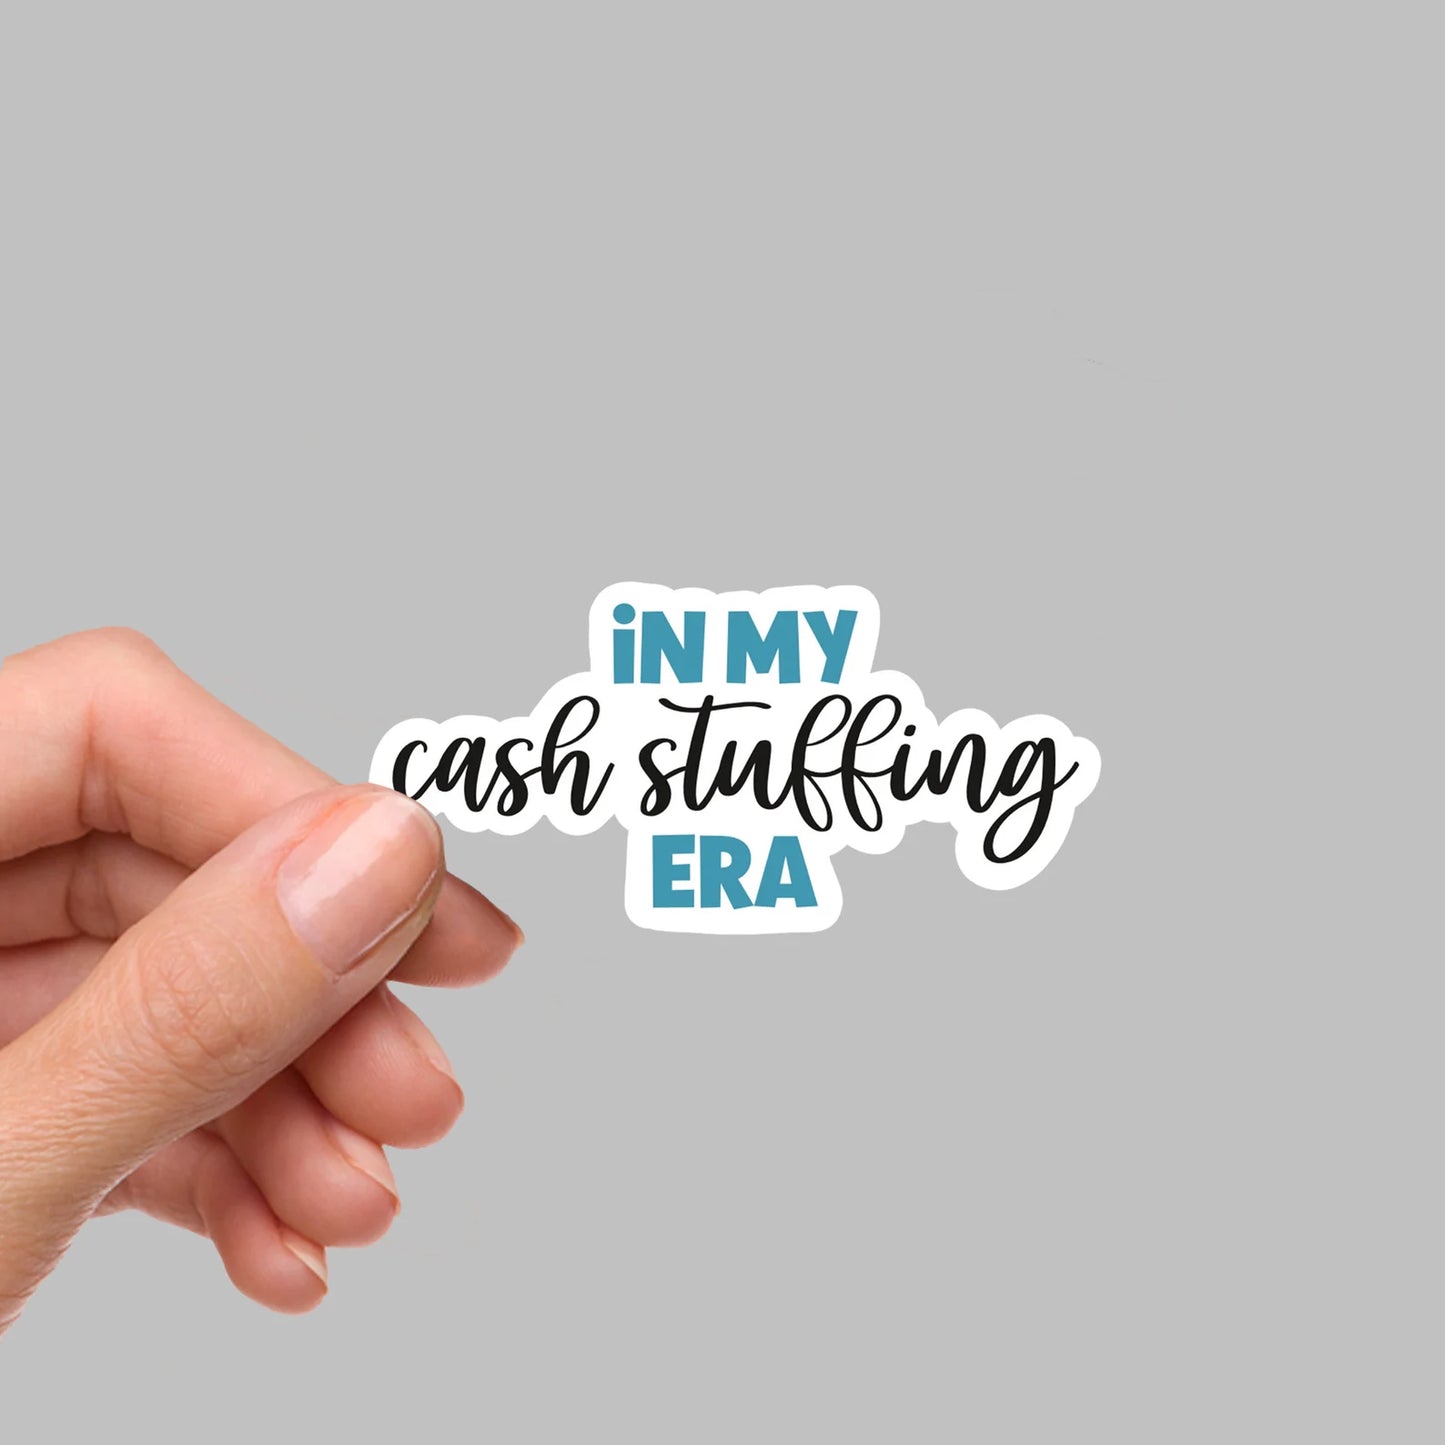 Cash Stuffing Era Sticker